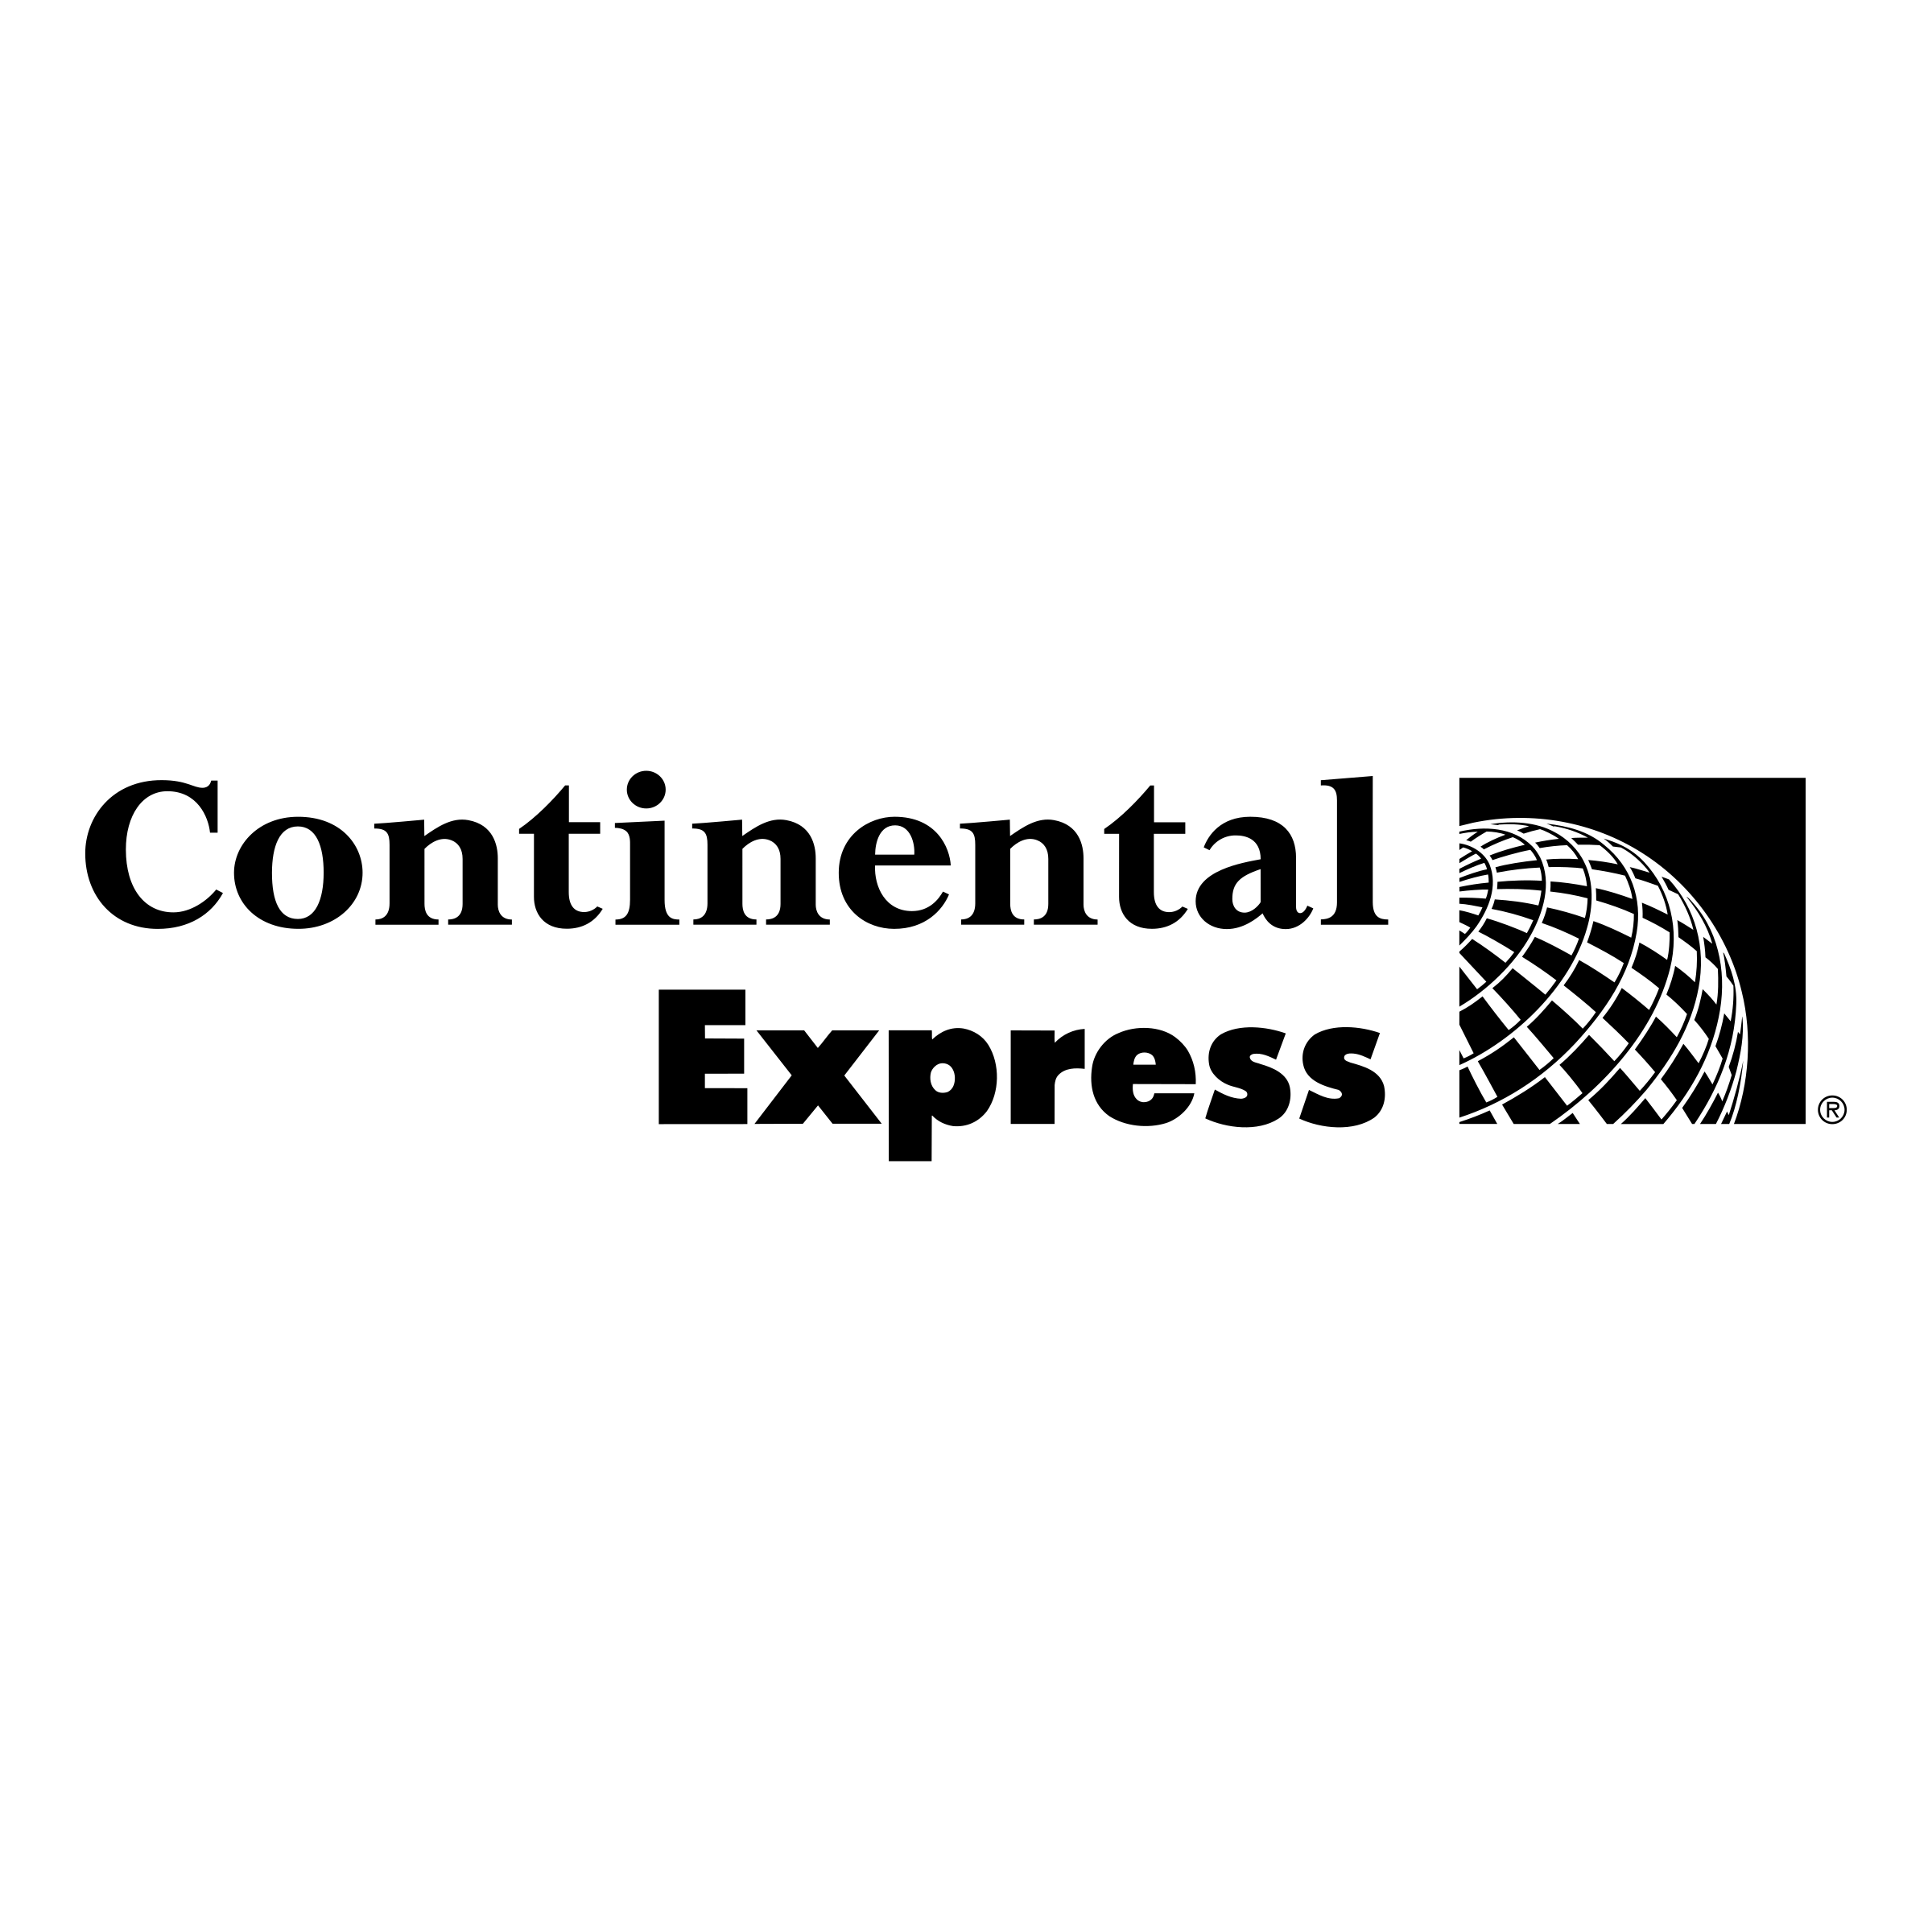 Continental Express Logo - Continental Express Logo PNG Transparent & SVG Vector - Freebie Supply